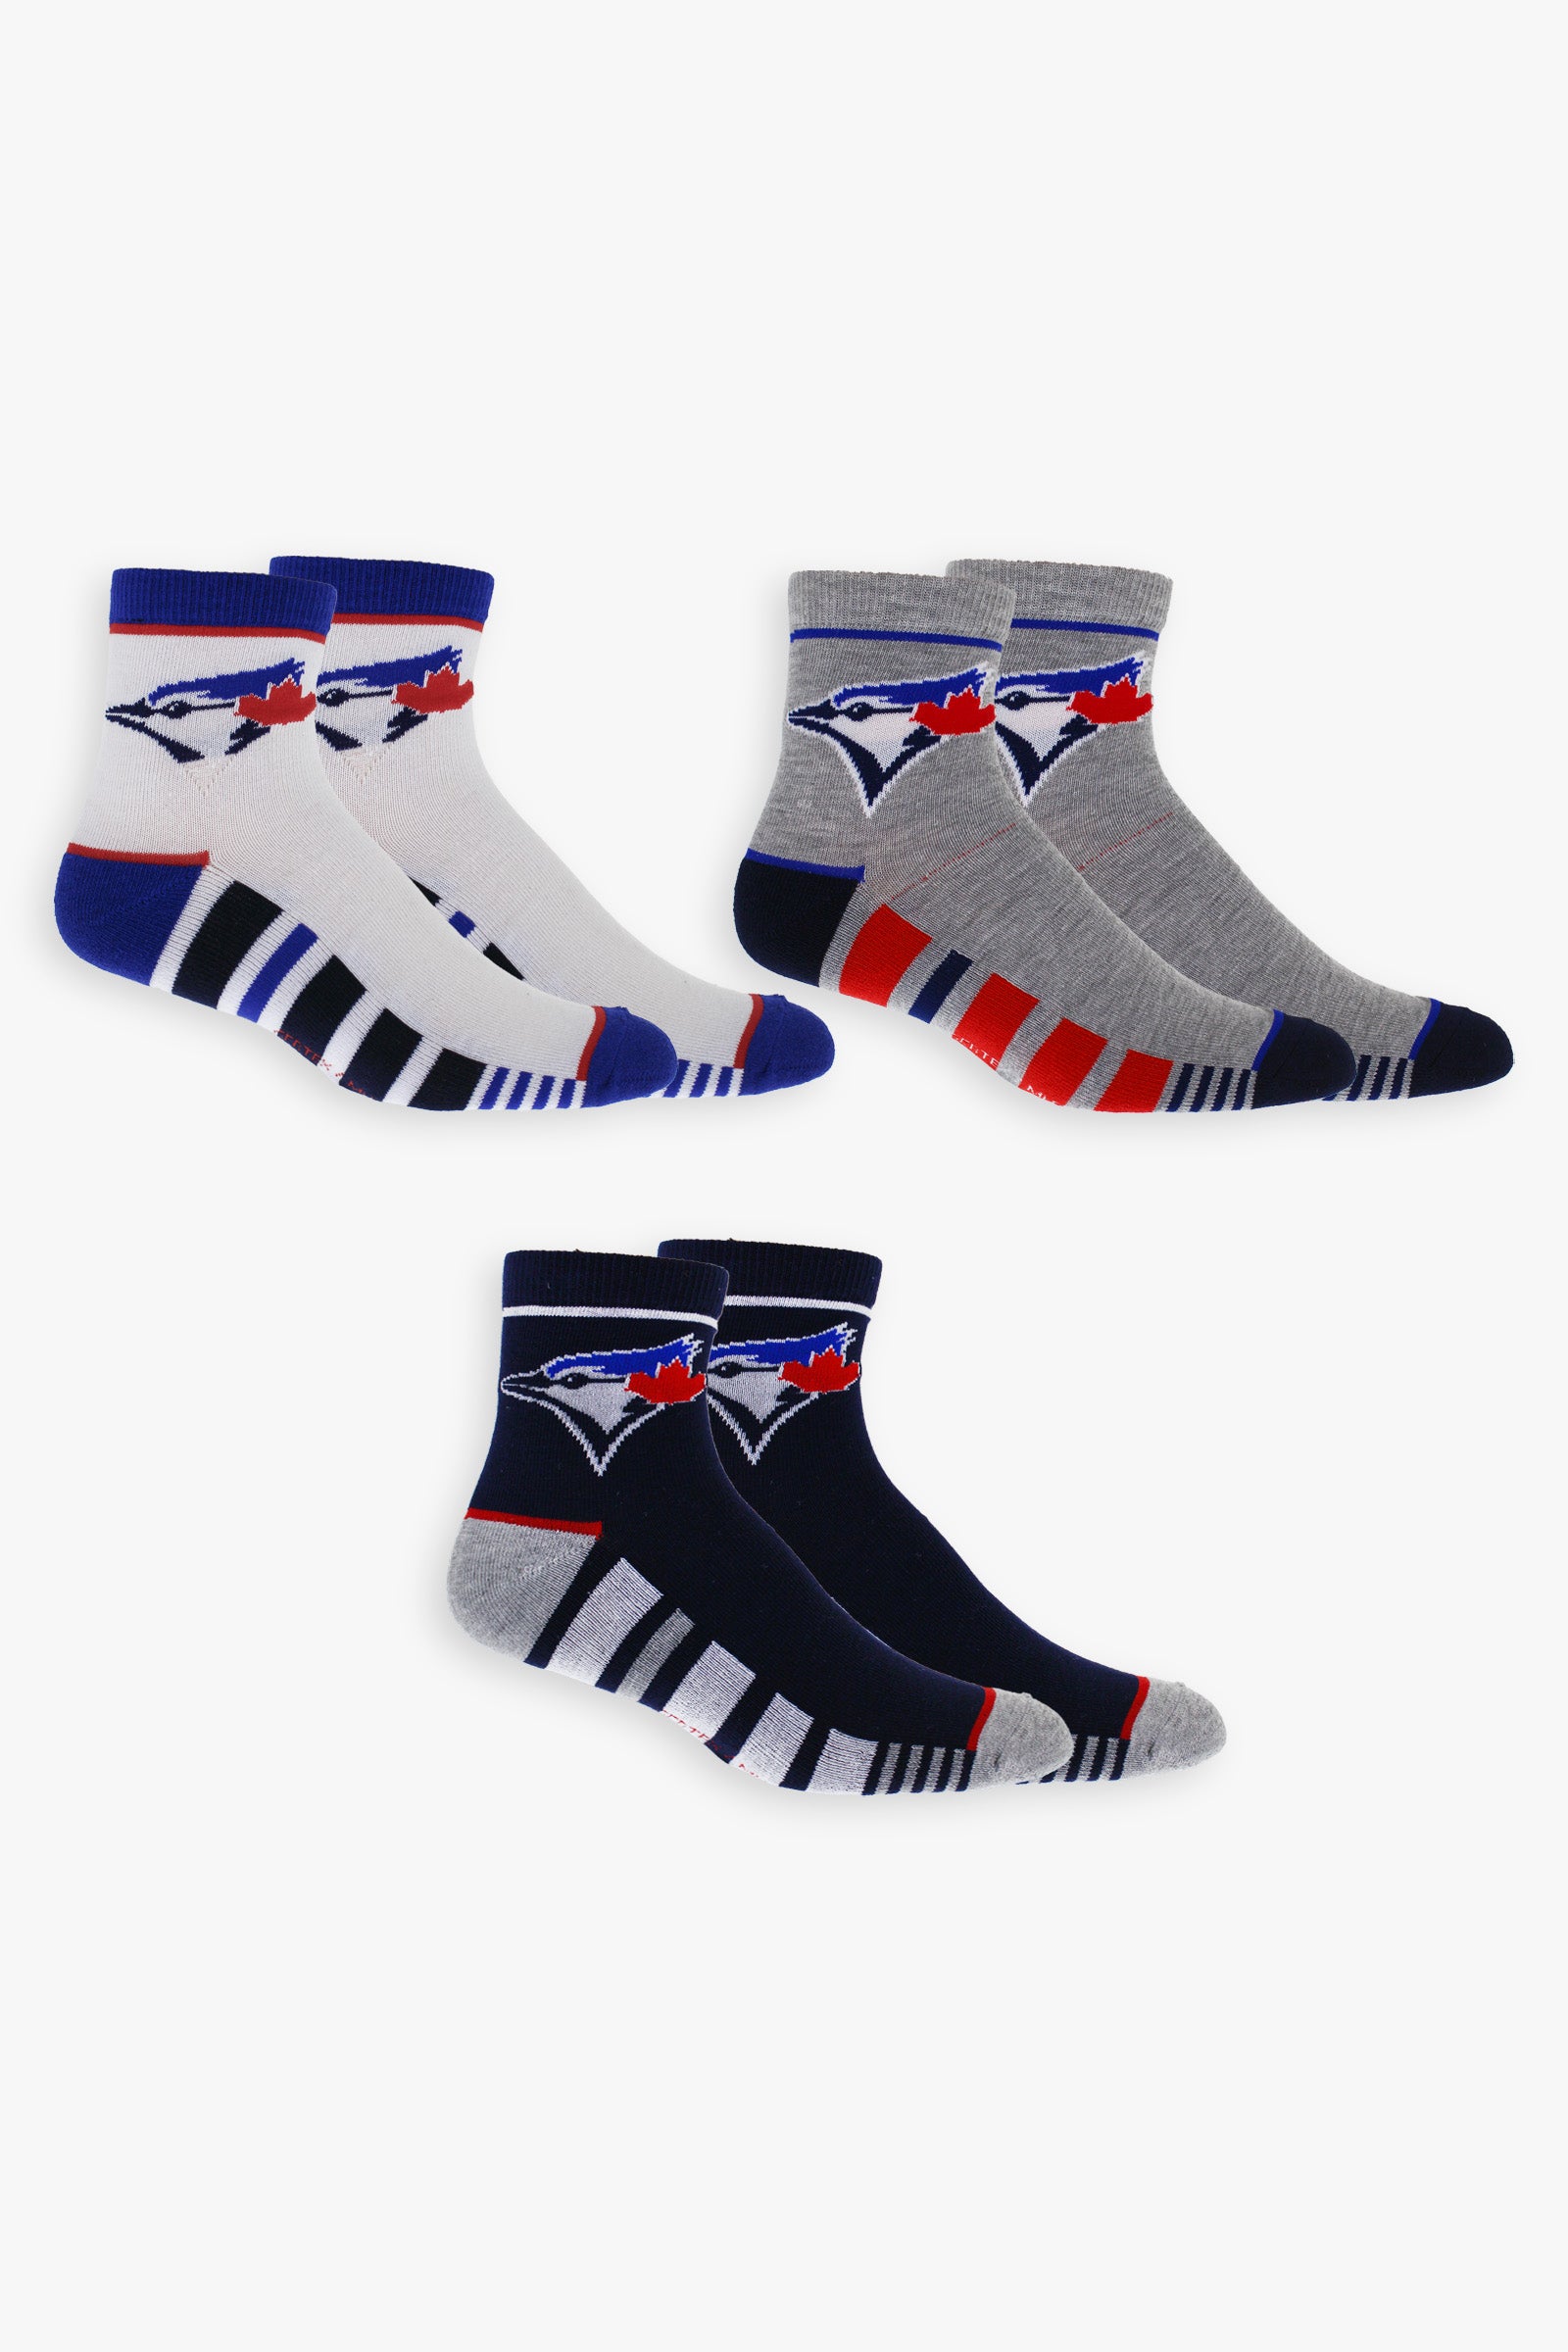 Gertex Toronto Blue Jays Men's 3-Pack Half Terry Quarter Socks